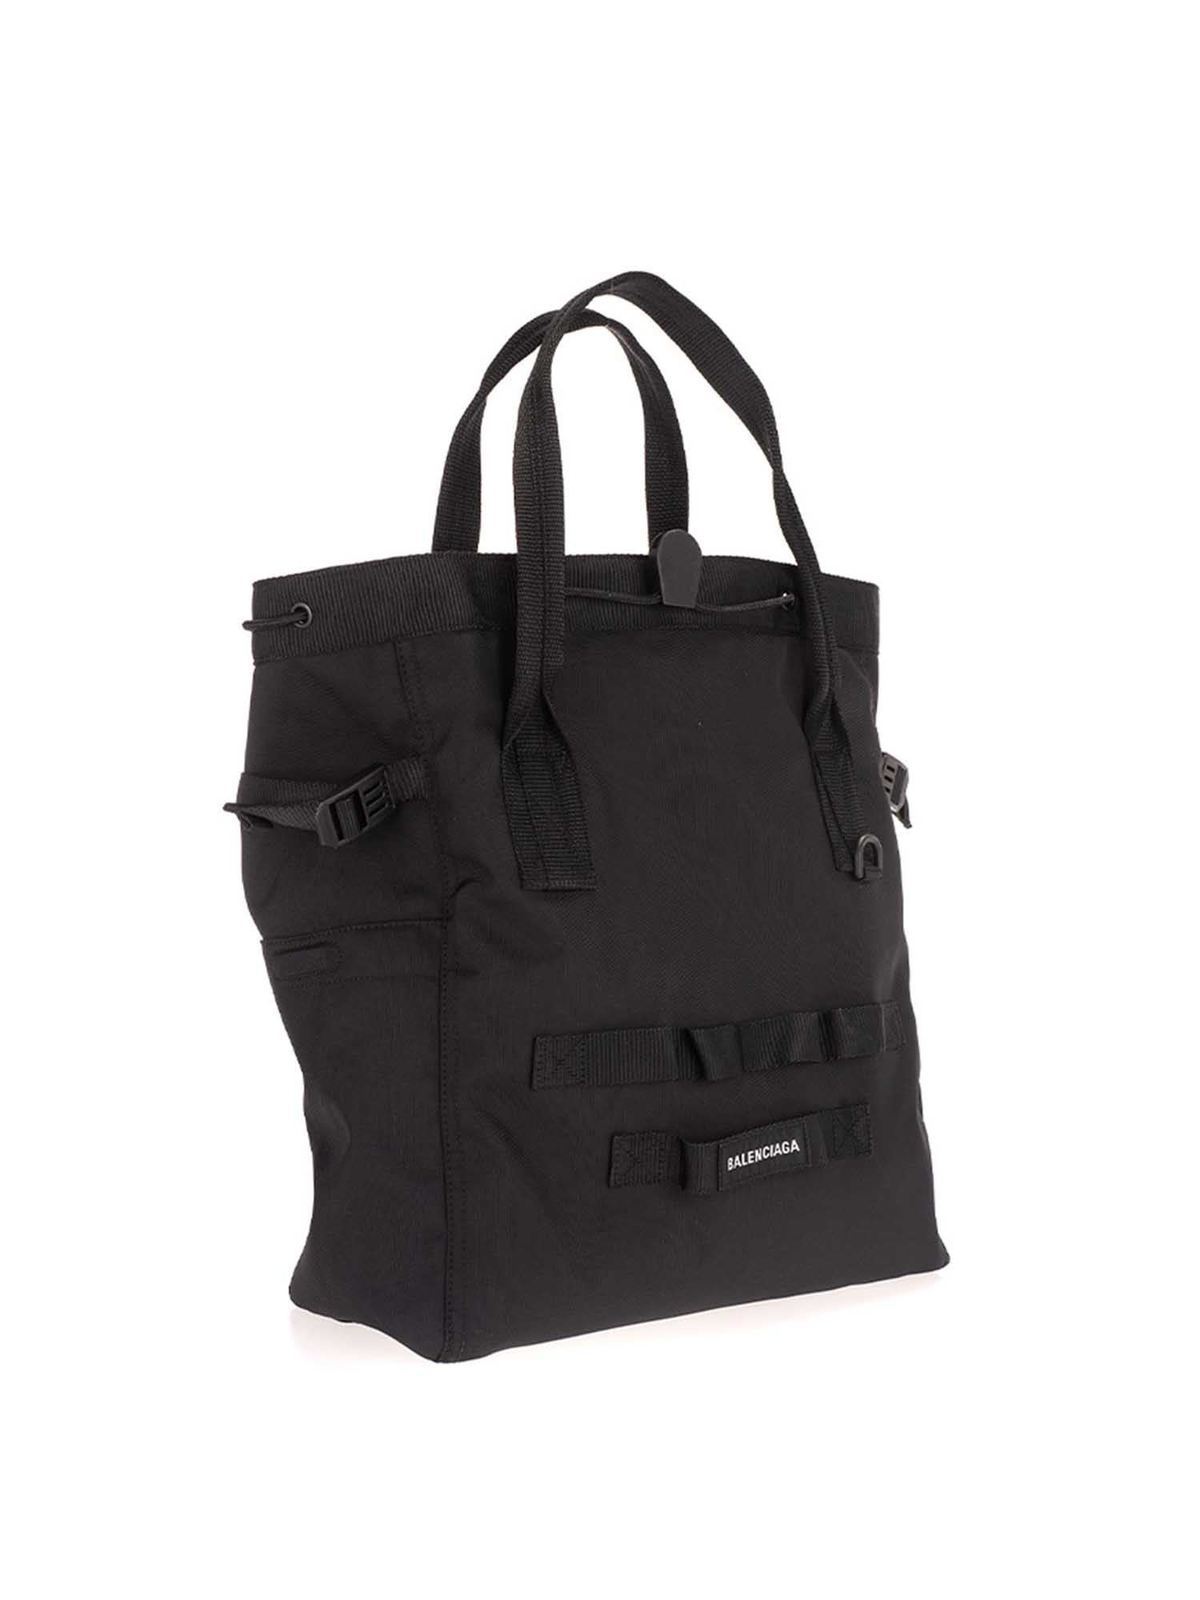 Totes bags Balenciaga - Army Tote bag in black - 6440402BKPI1000